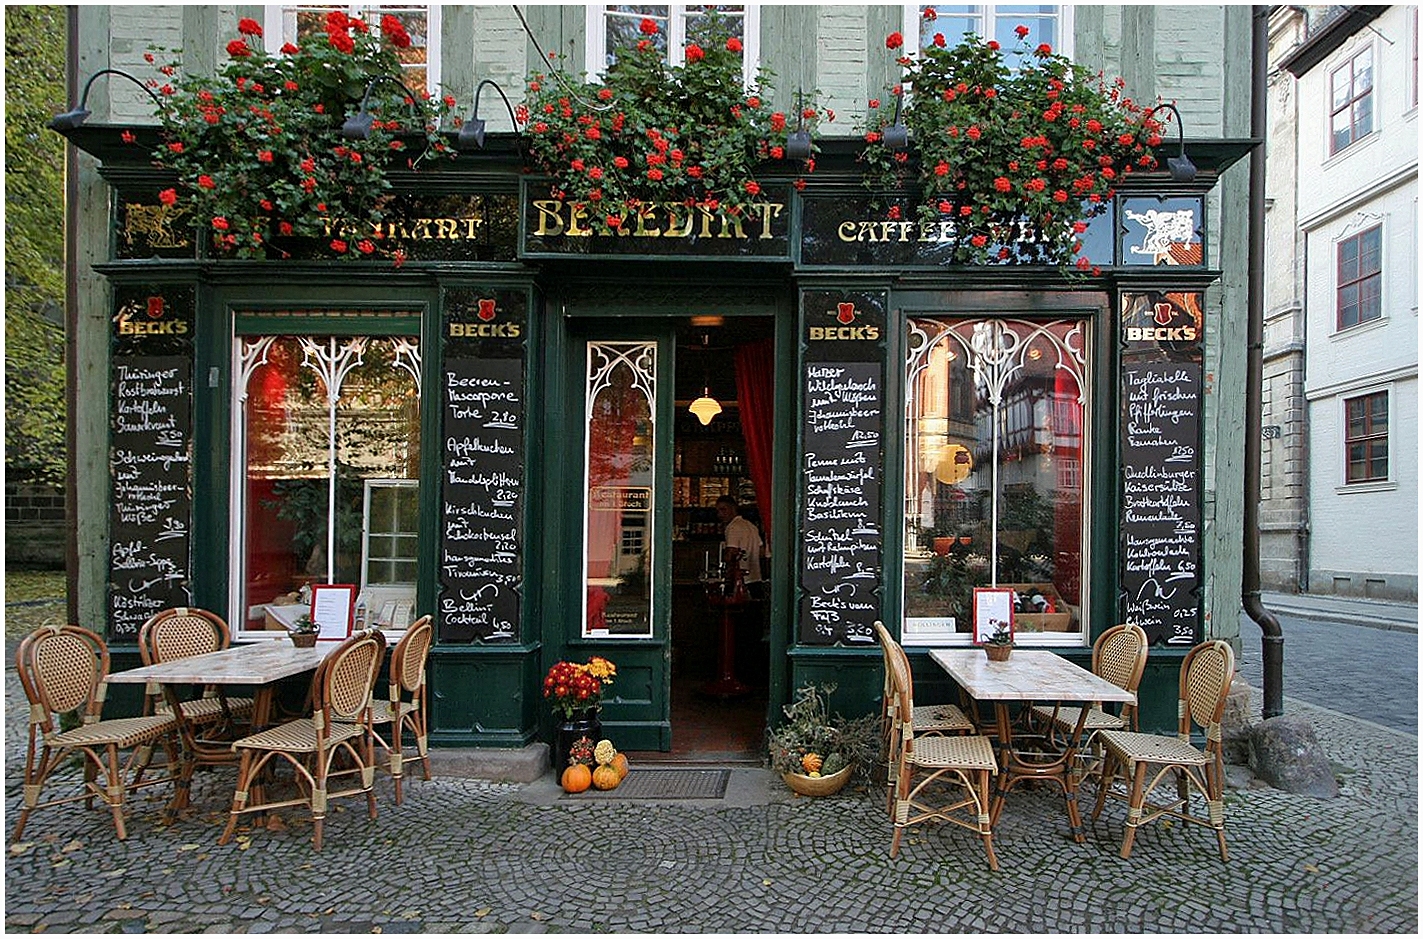 cafe - restaurant "benedikt"